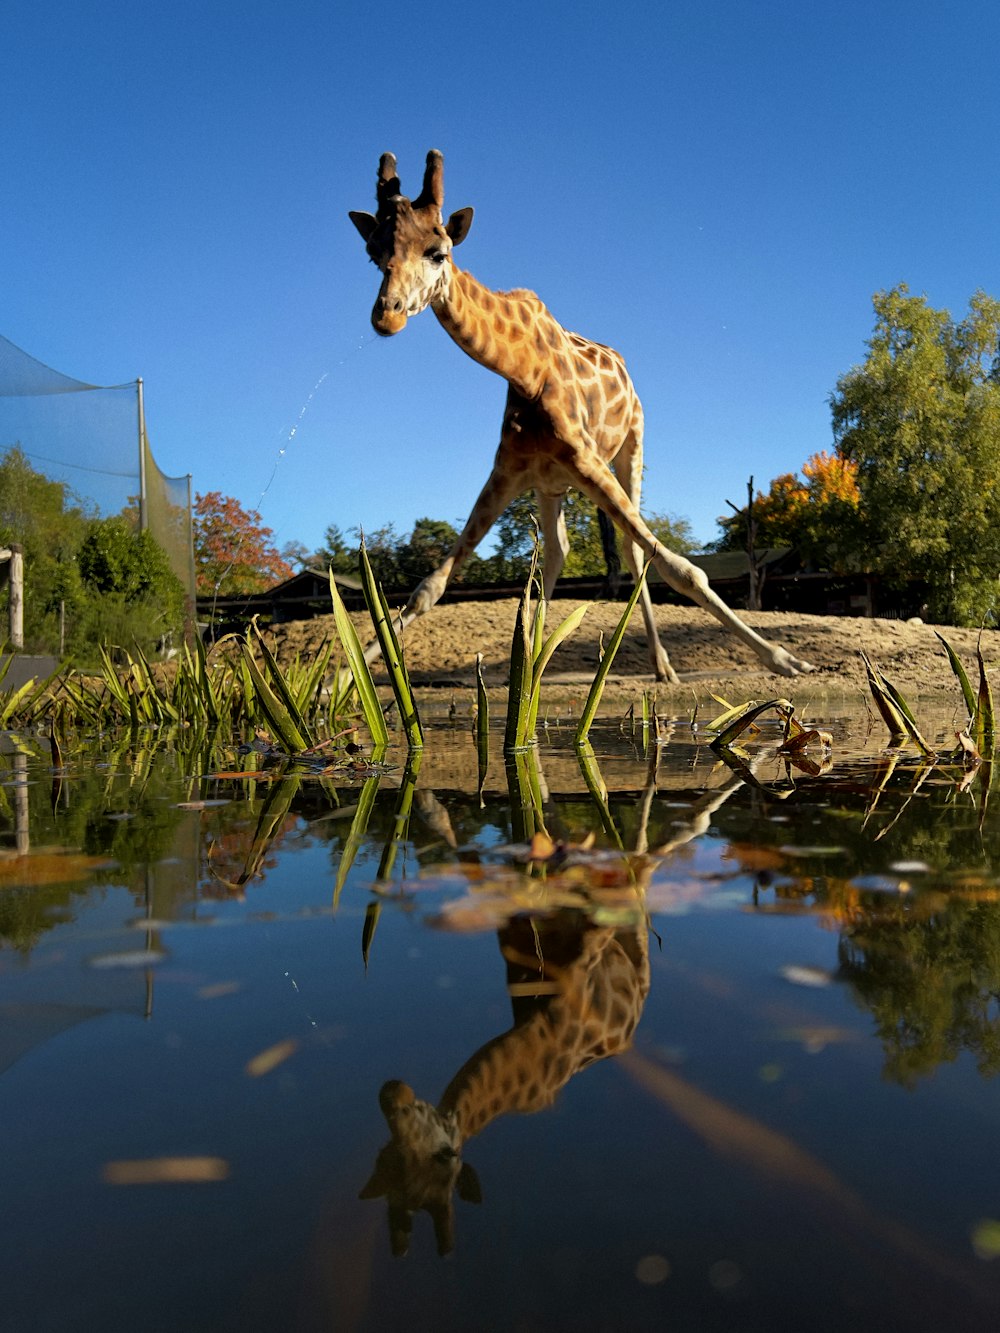 a giraffe standing in water